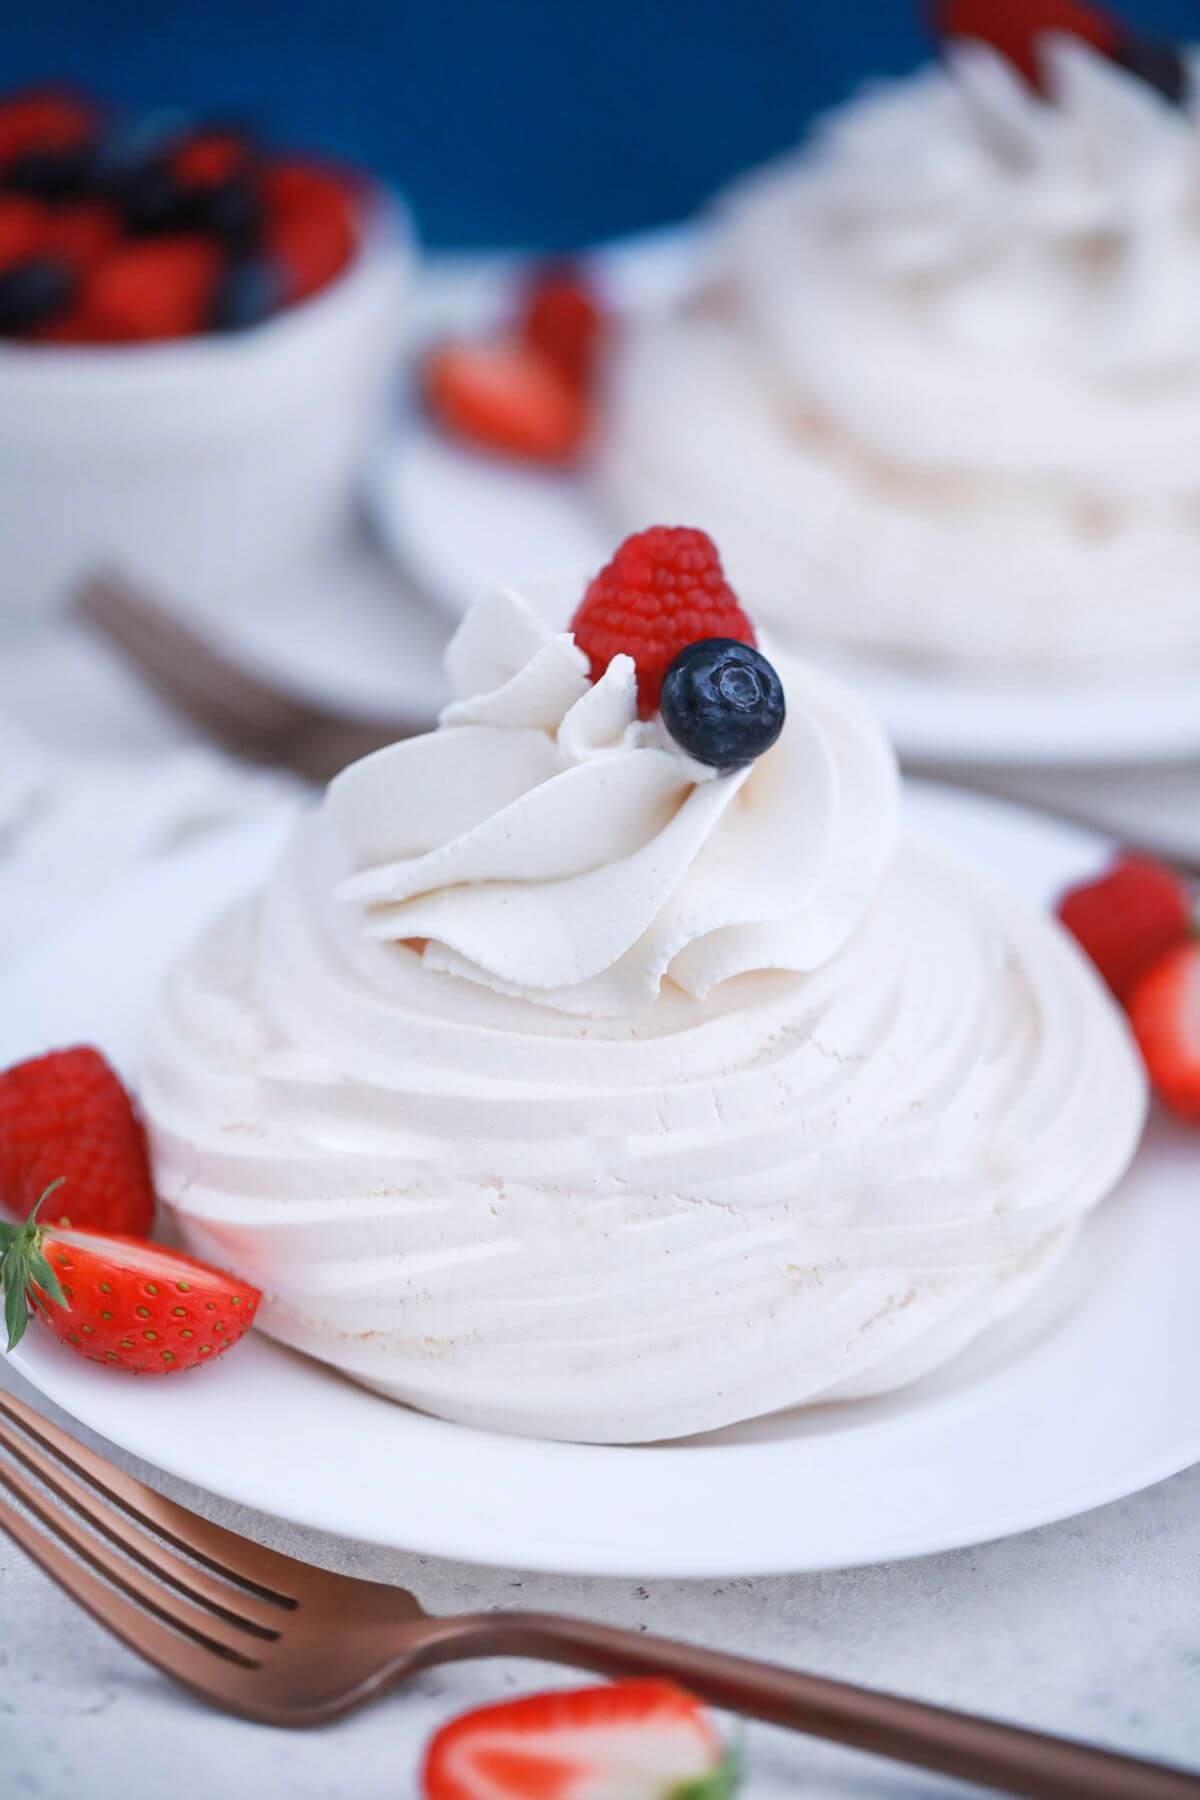 Mini pavlova with whipped cream and berries.